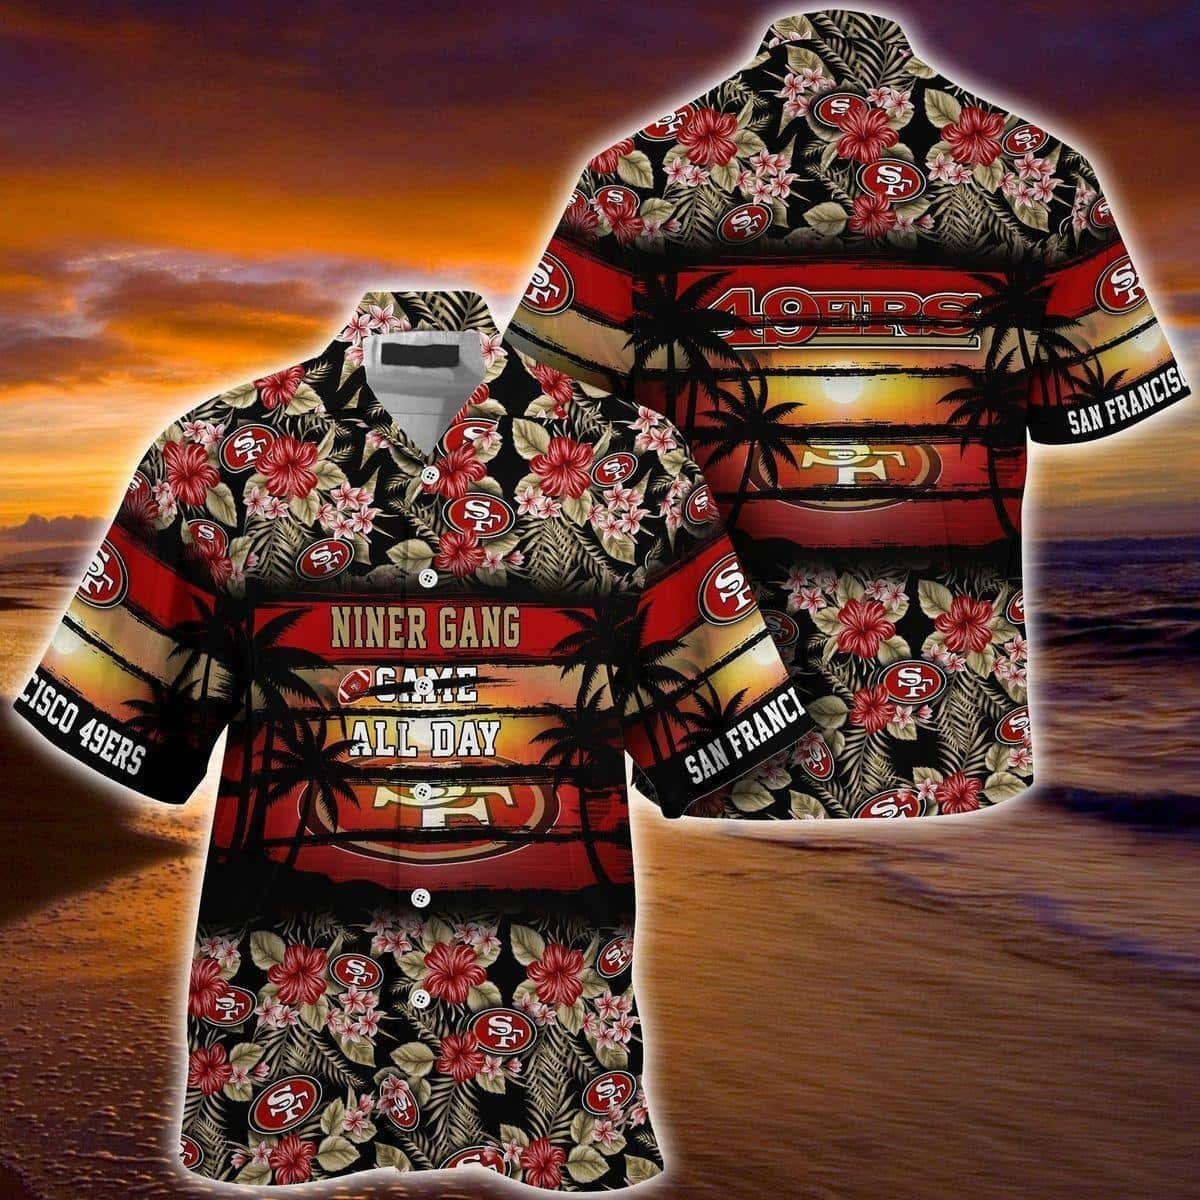 Pittsburg Steelers Short Sleeve Button Up Tropical Hawaiian Shirt VER02